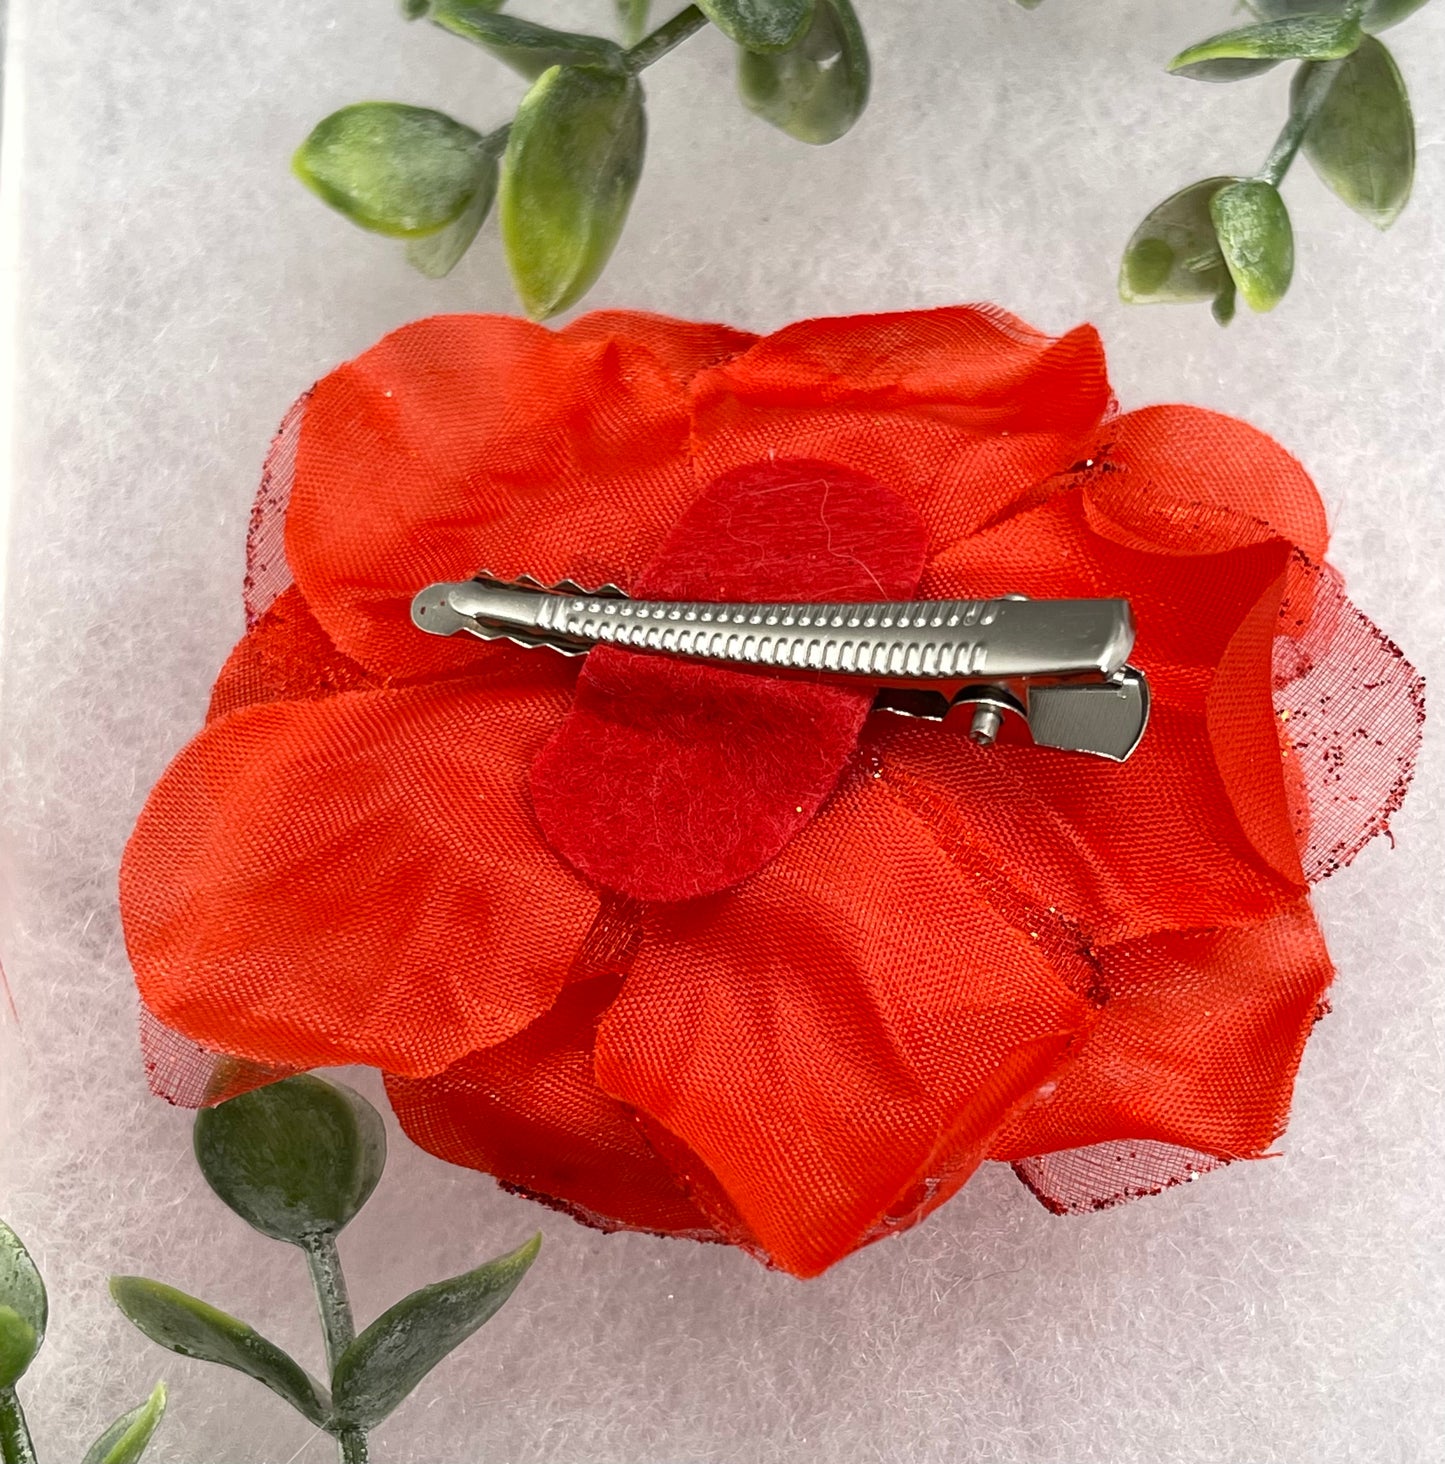 Red rose flower crystal rhinestone embellished alligator clip approximately 3.0” formal hair accessory wedding bridal